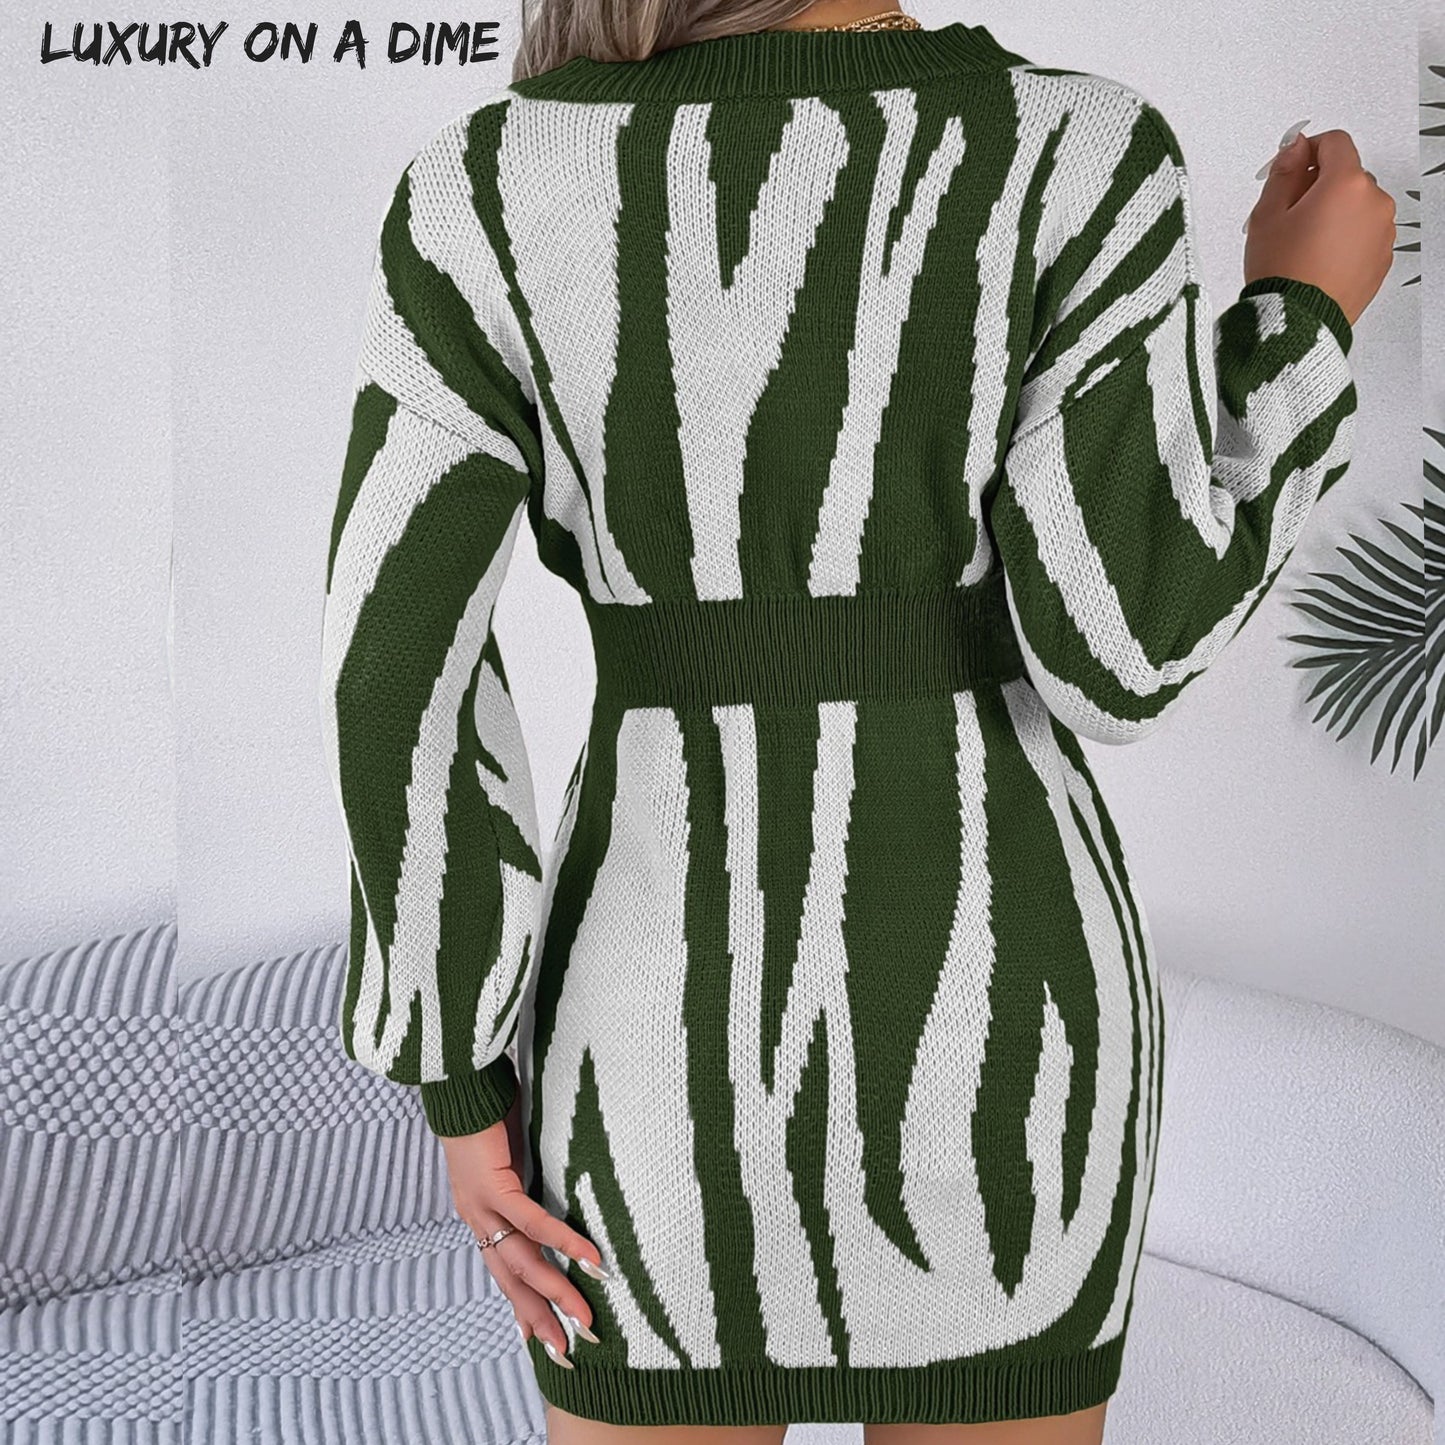 Zebra Knit Sweater Dress Round Neck Playful Animal Print Long Sleeve Mini